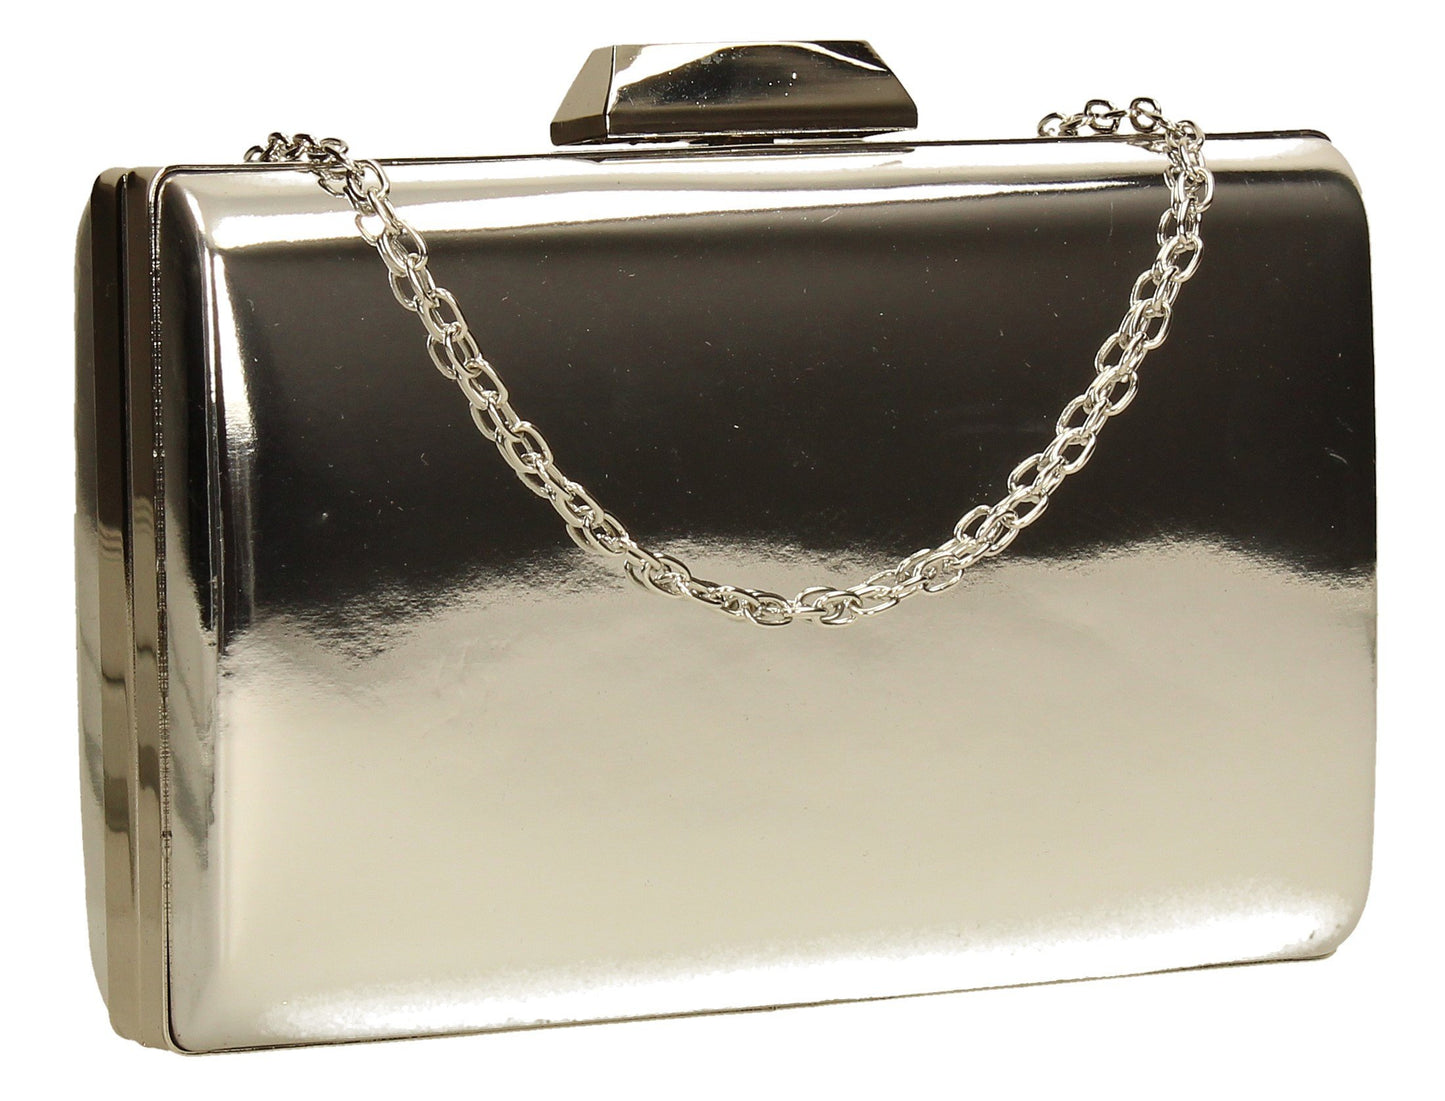 SWANKYSWANS Arizona Metallic Clutch Bag Silver Cute Cheap Clutch Bag For Weddings School and Work